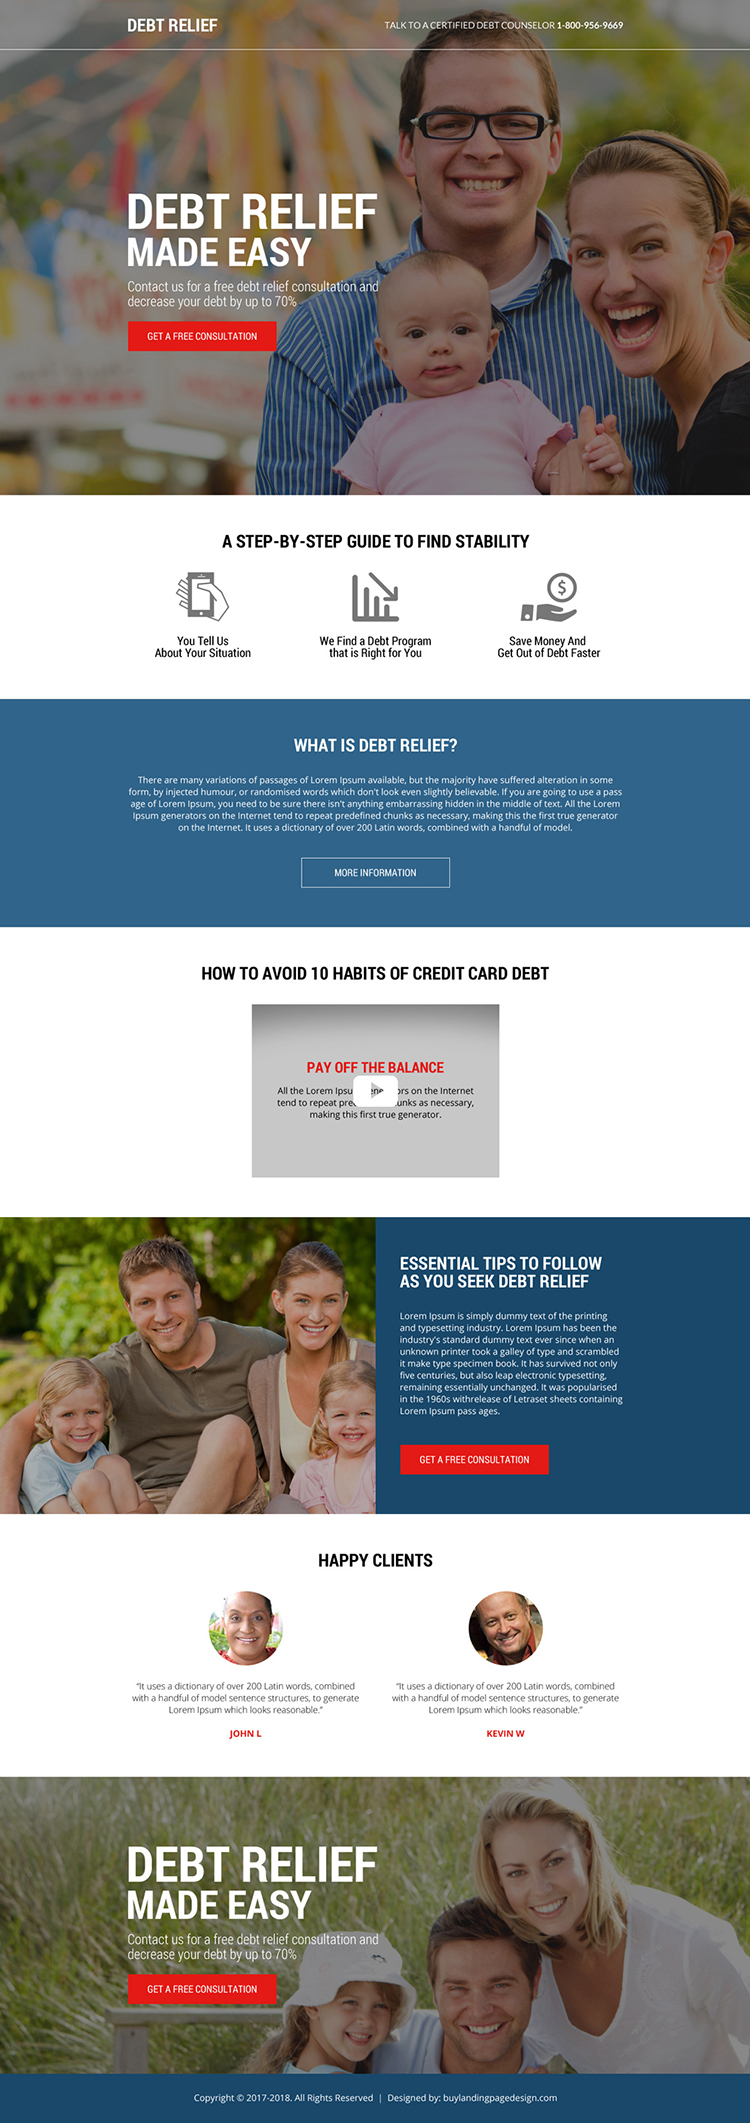 free debt relief consultation responsive landing page design